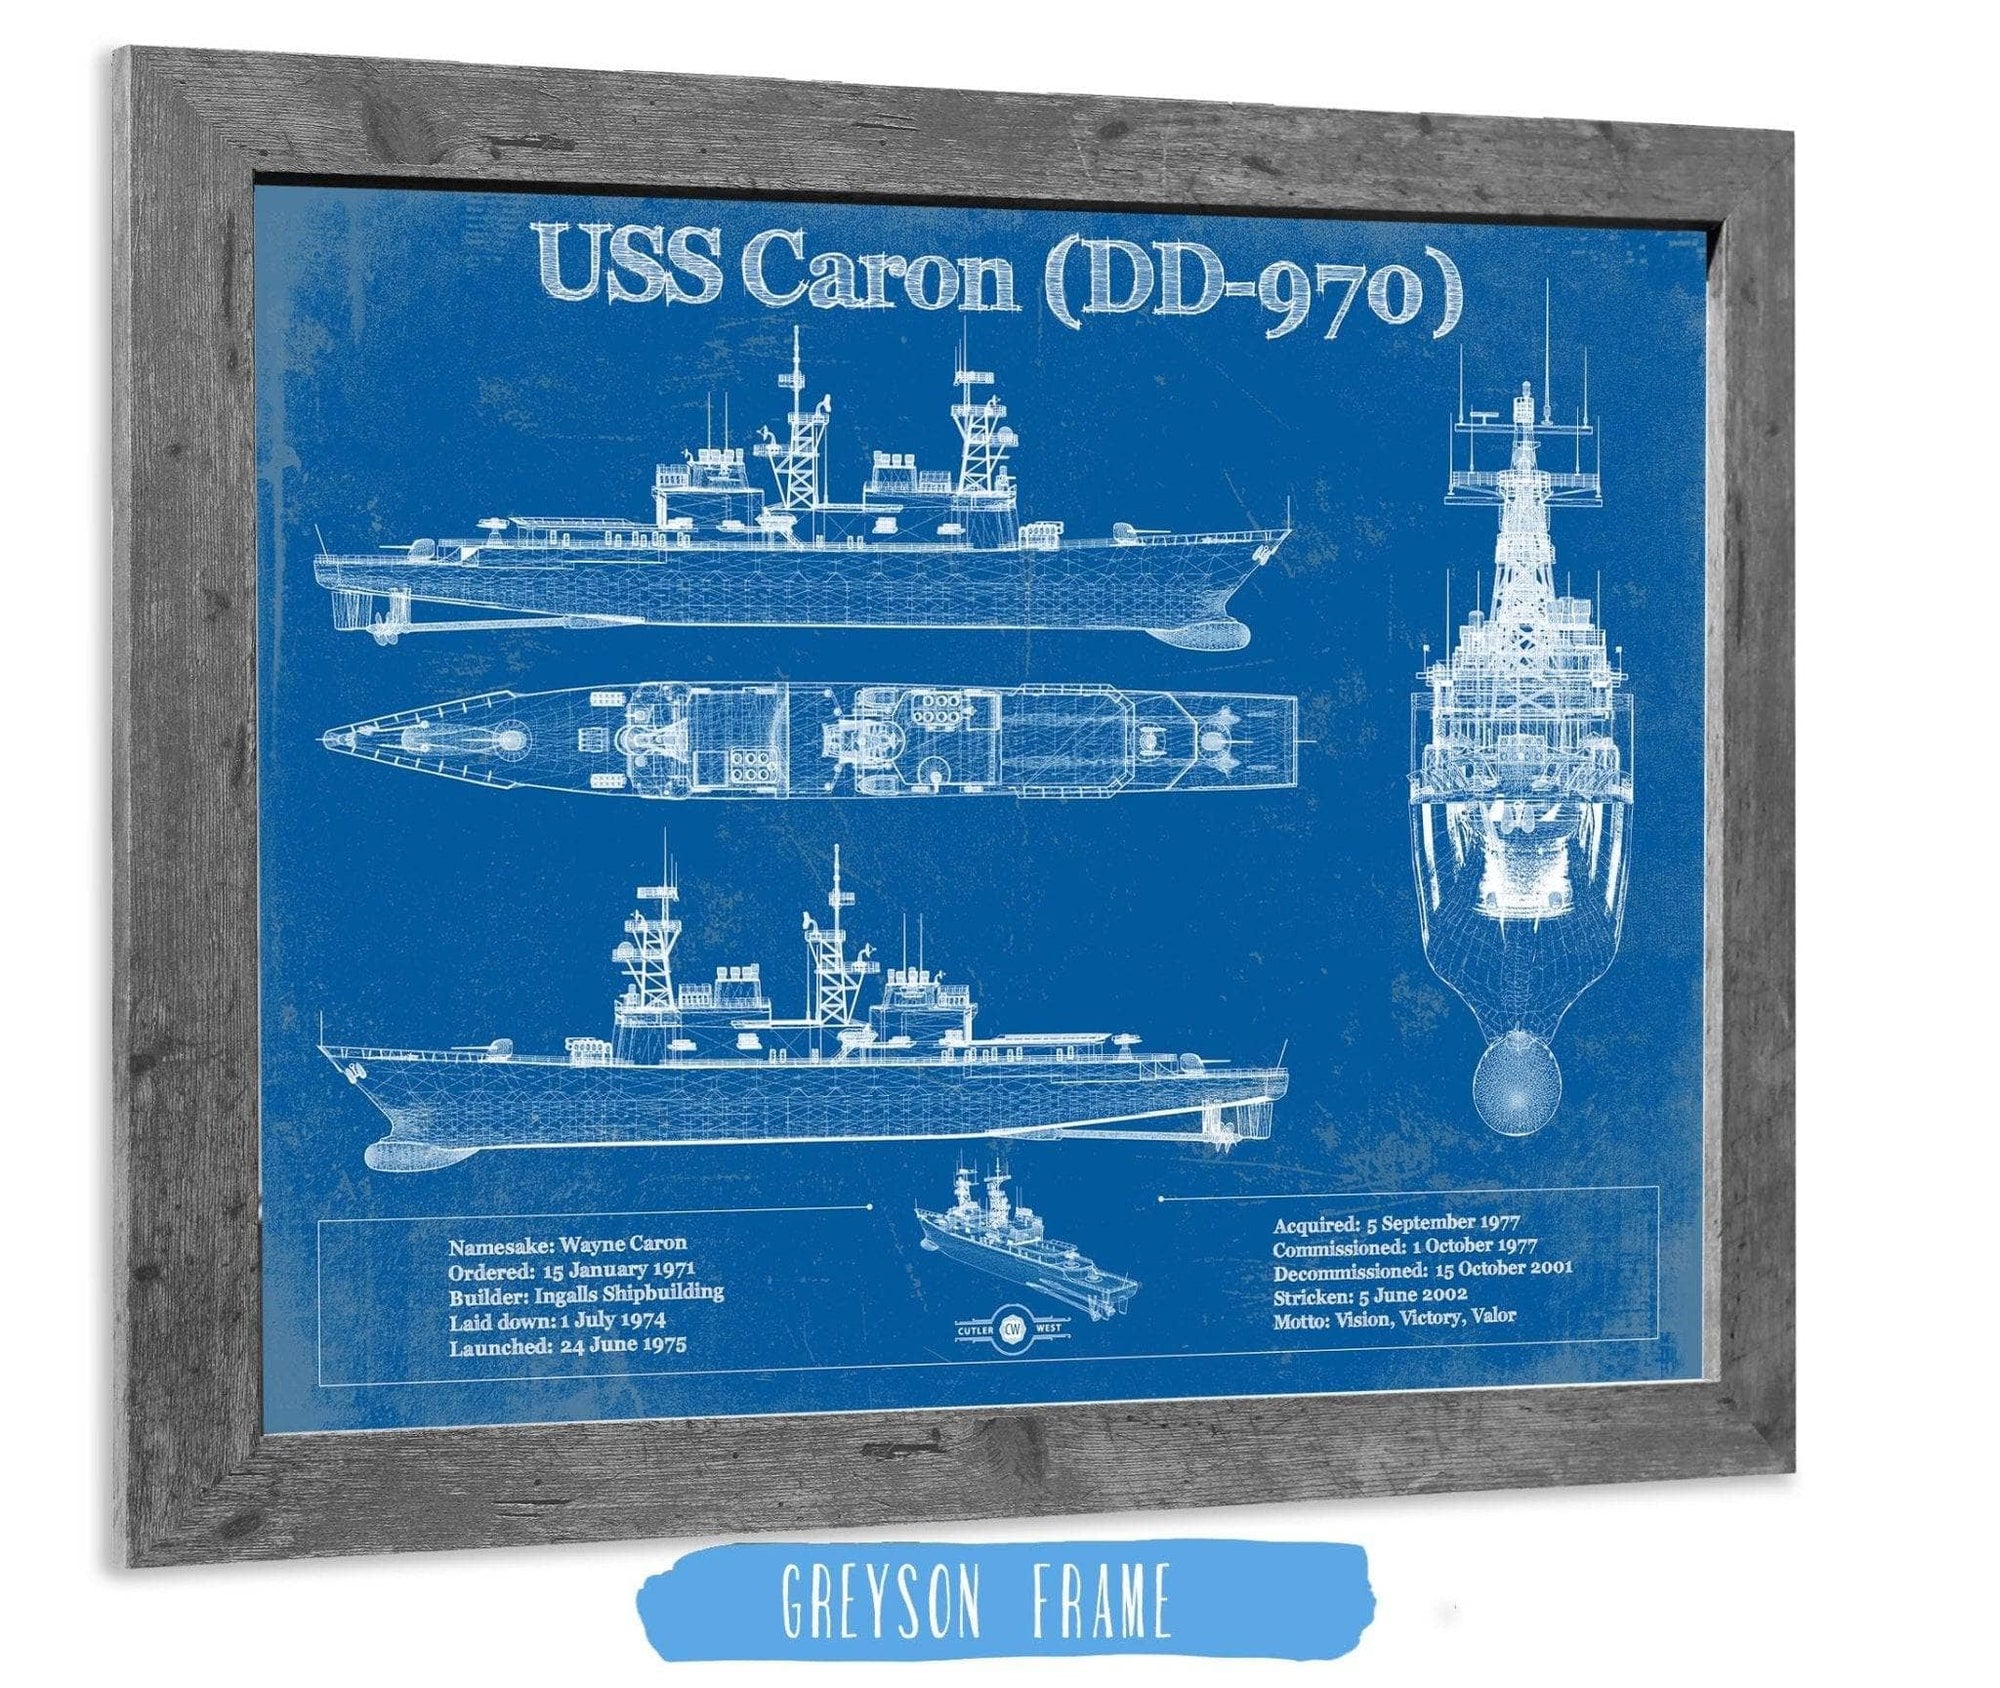 Cutler West Naval Military 14" x 11" / Greyson Frame USS Caron (DD-970) Blueprint Original Military Wall Art - Customizable 933311002_28153